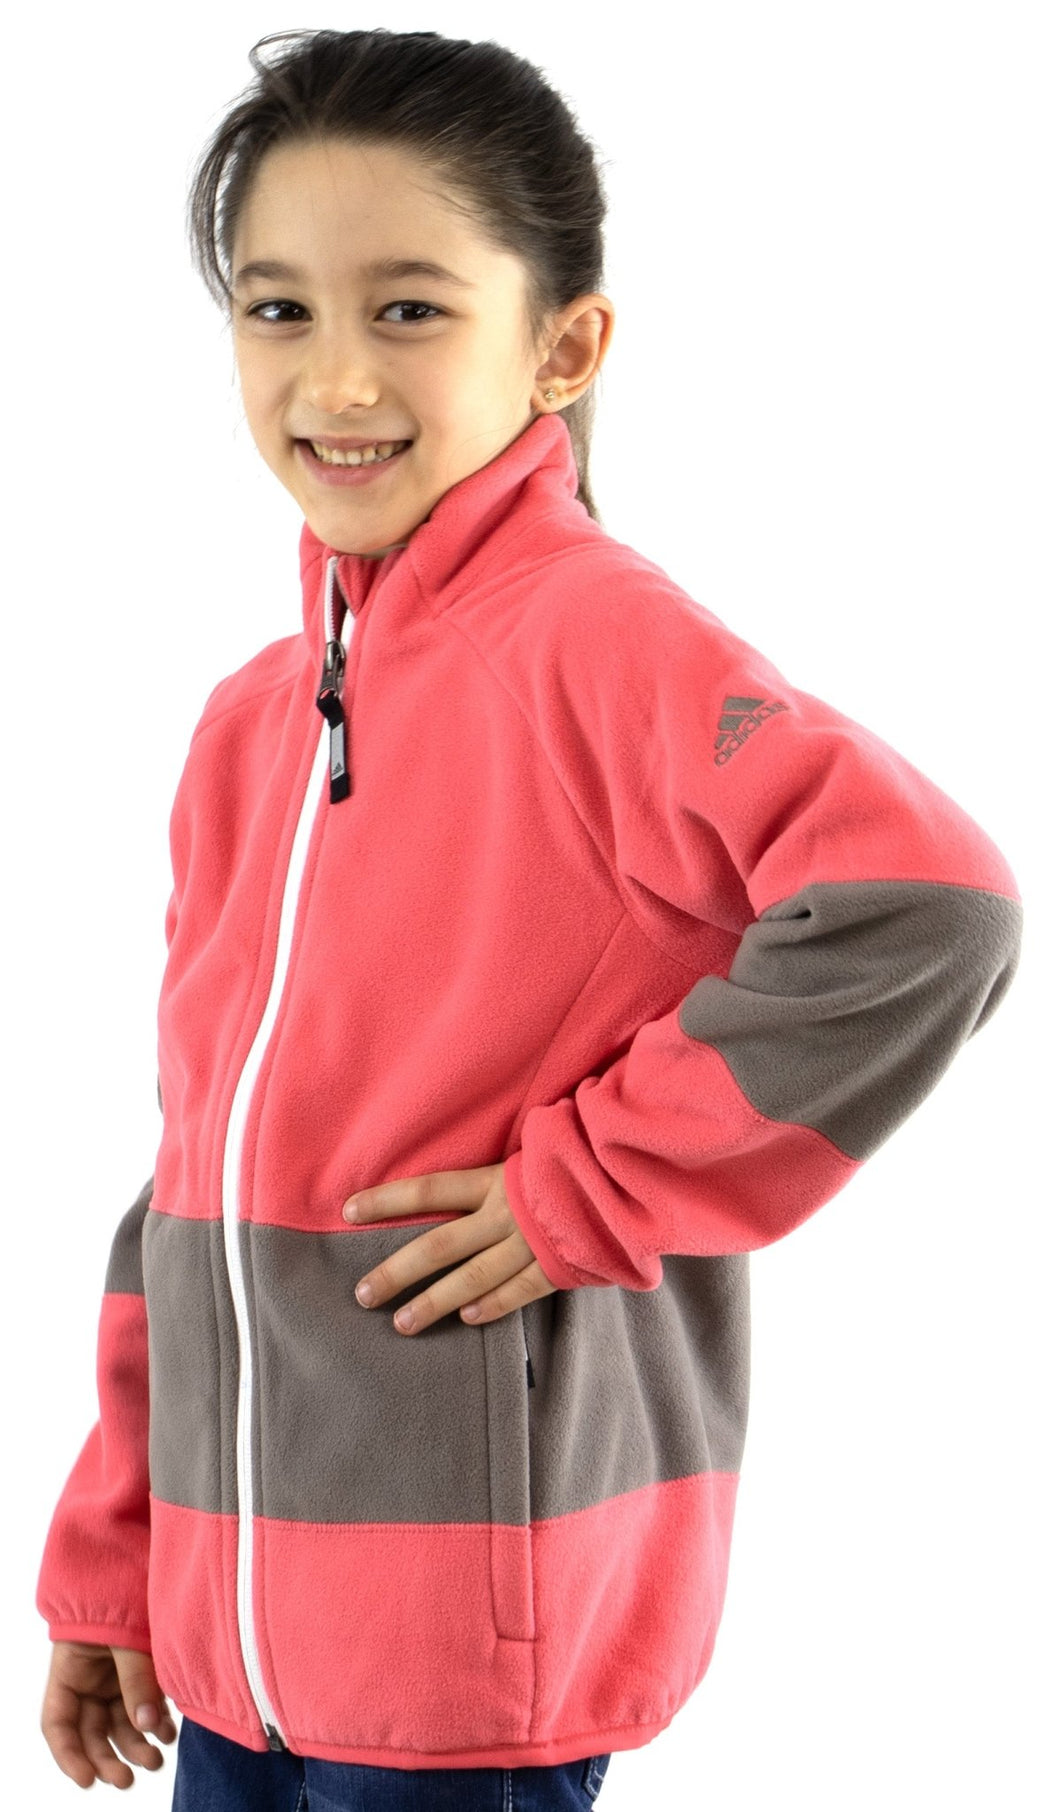 Onbemand atomair Huiskamer Adidas Kinder Mädchen Fleecejacke Jacke Sportjacke Sweatshirt Rosa Gr. –  Weseli